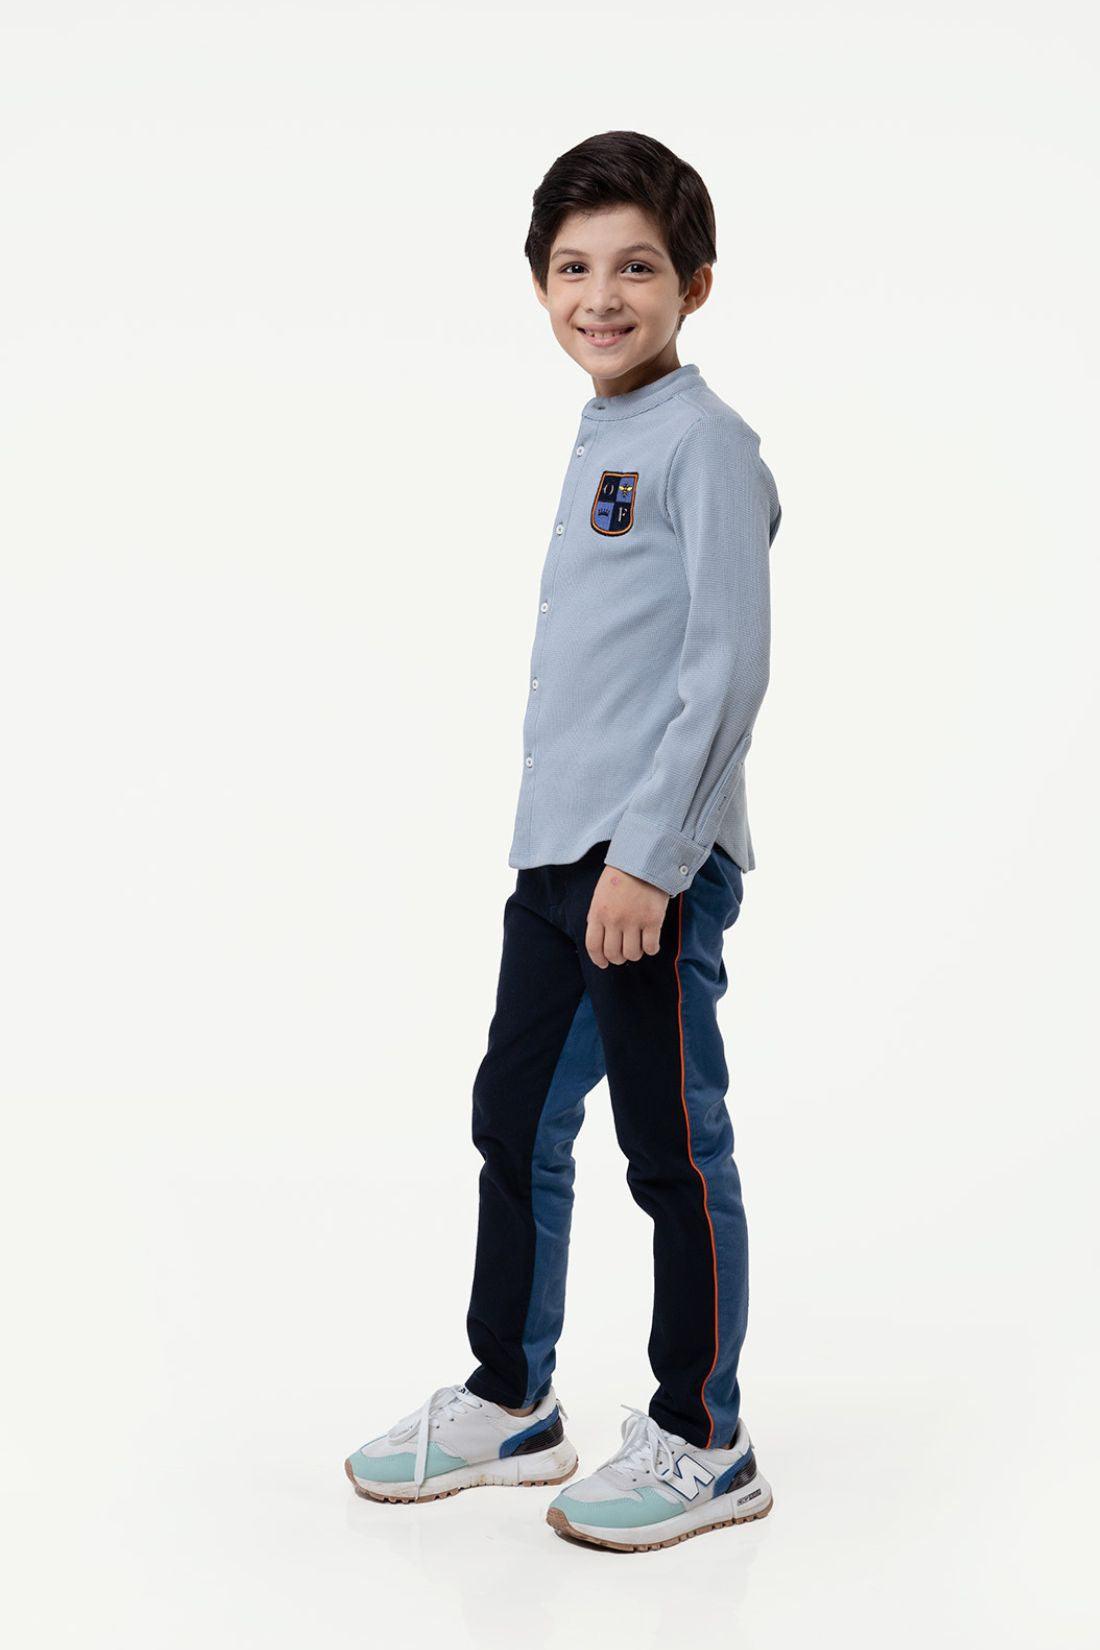 One Friday Kids Boys Blue Chinese Collar Shirt